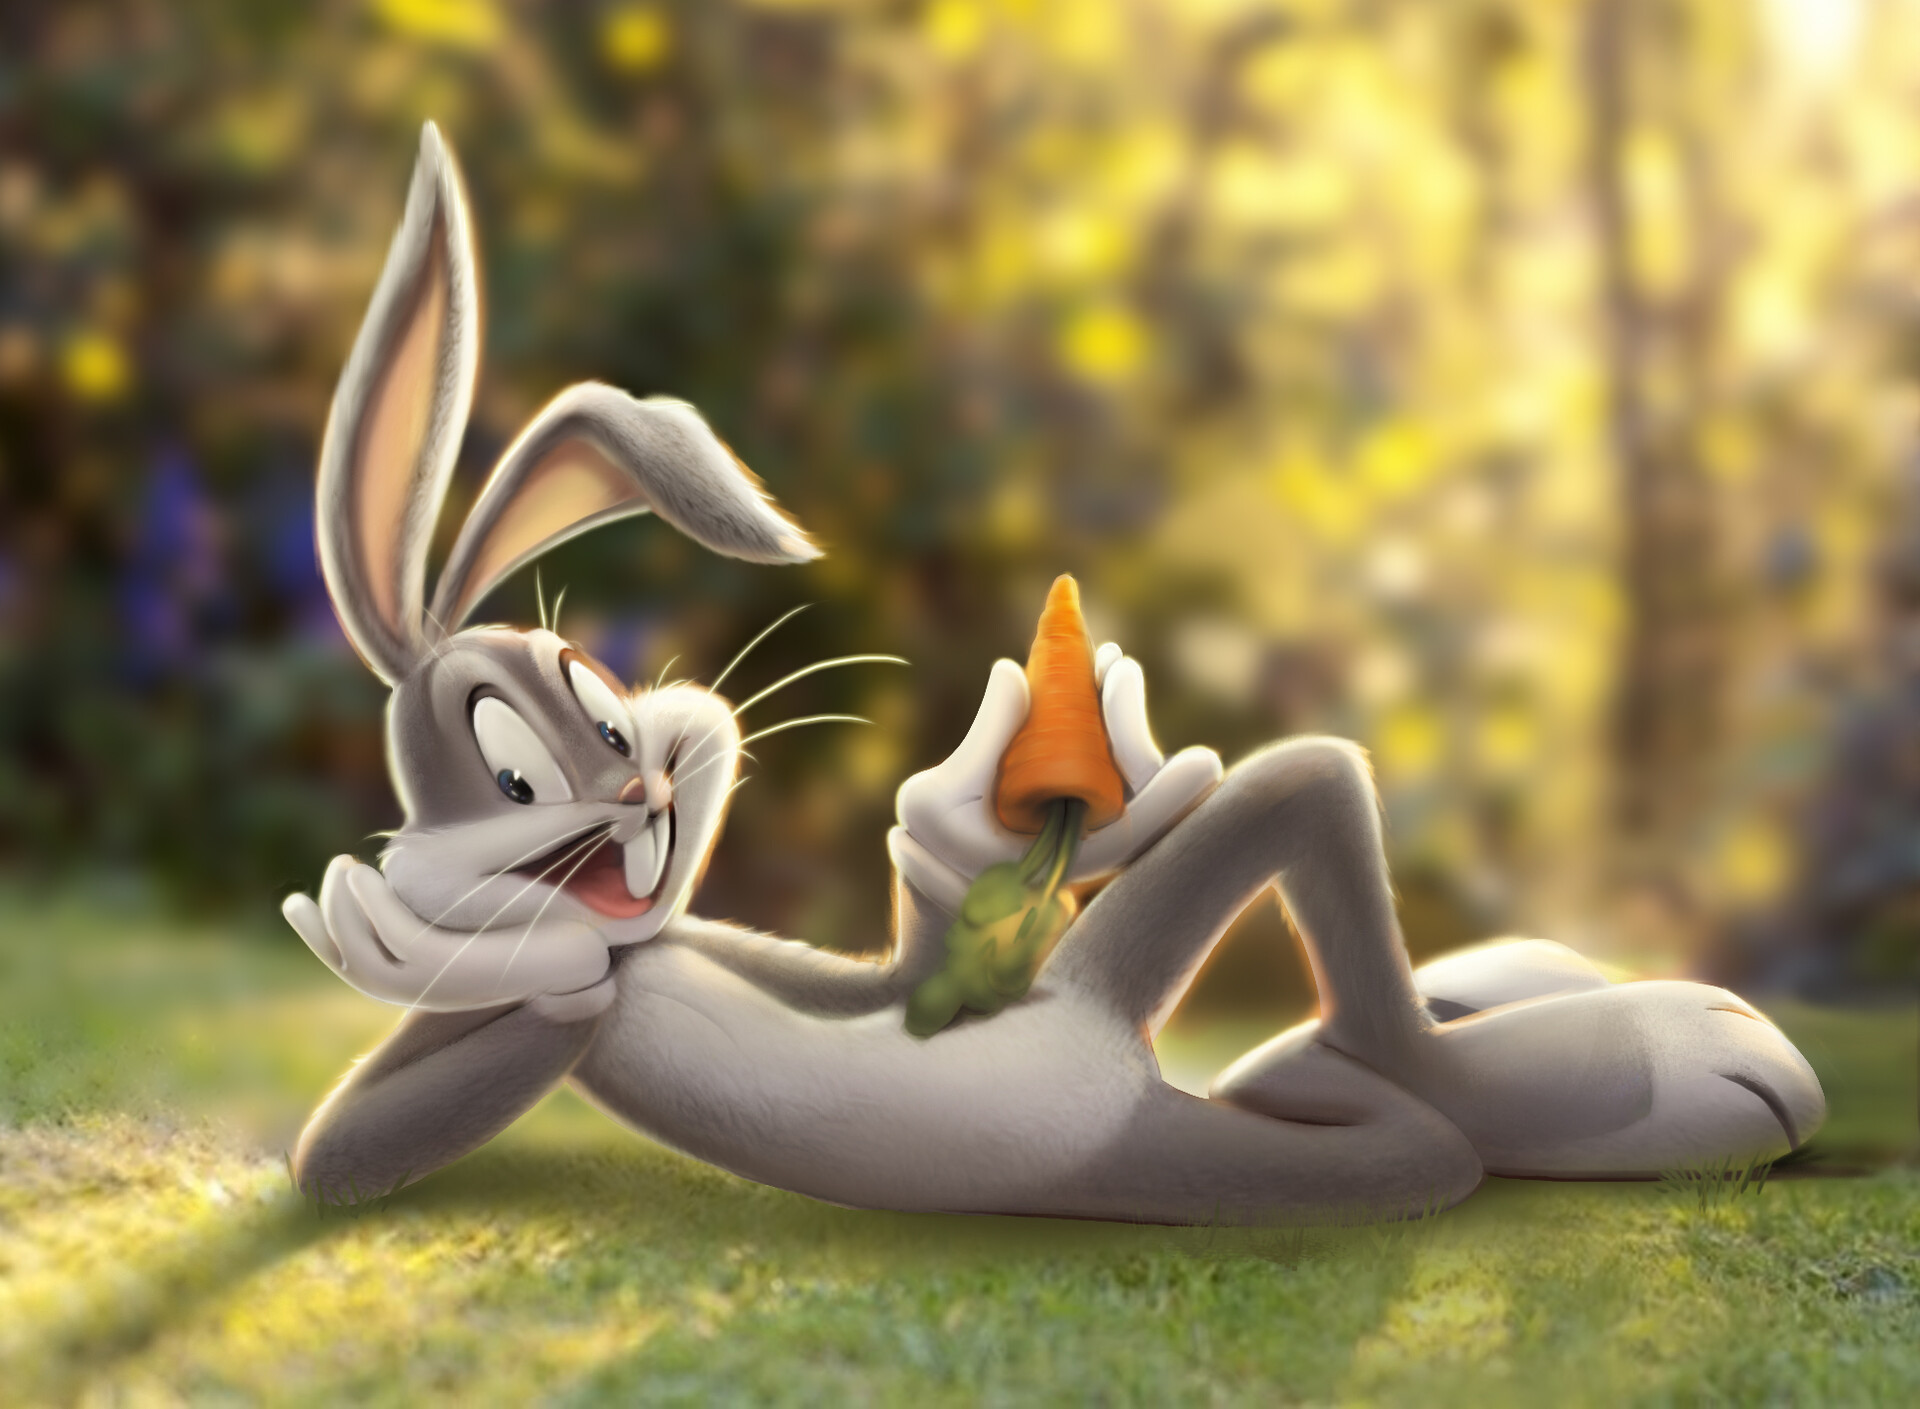 ArtStation - 2d render for Bugs Bunny character